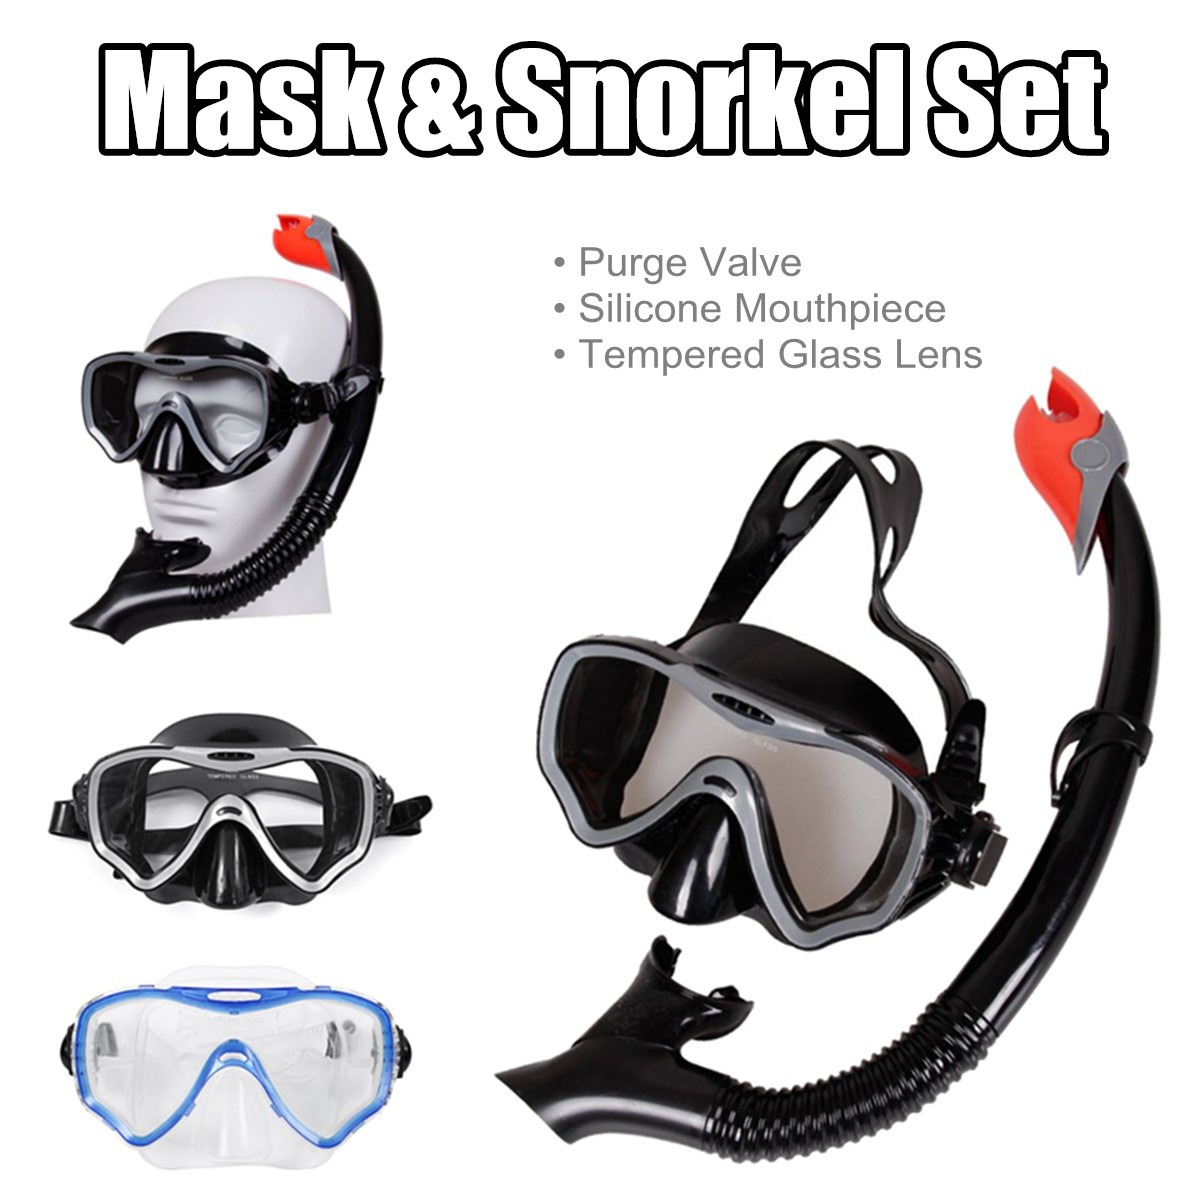 Snorkel-Set-Dry-Top-Snorkel-Mask-Professional-Diving-Snorkelling-Mask-and-SnorkelL-Diving-Set-1525316-2